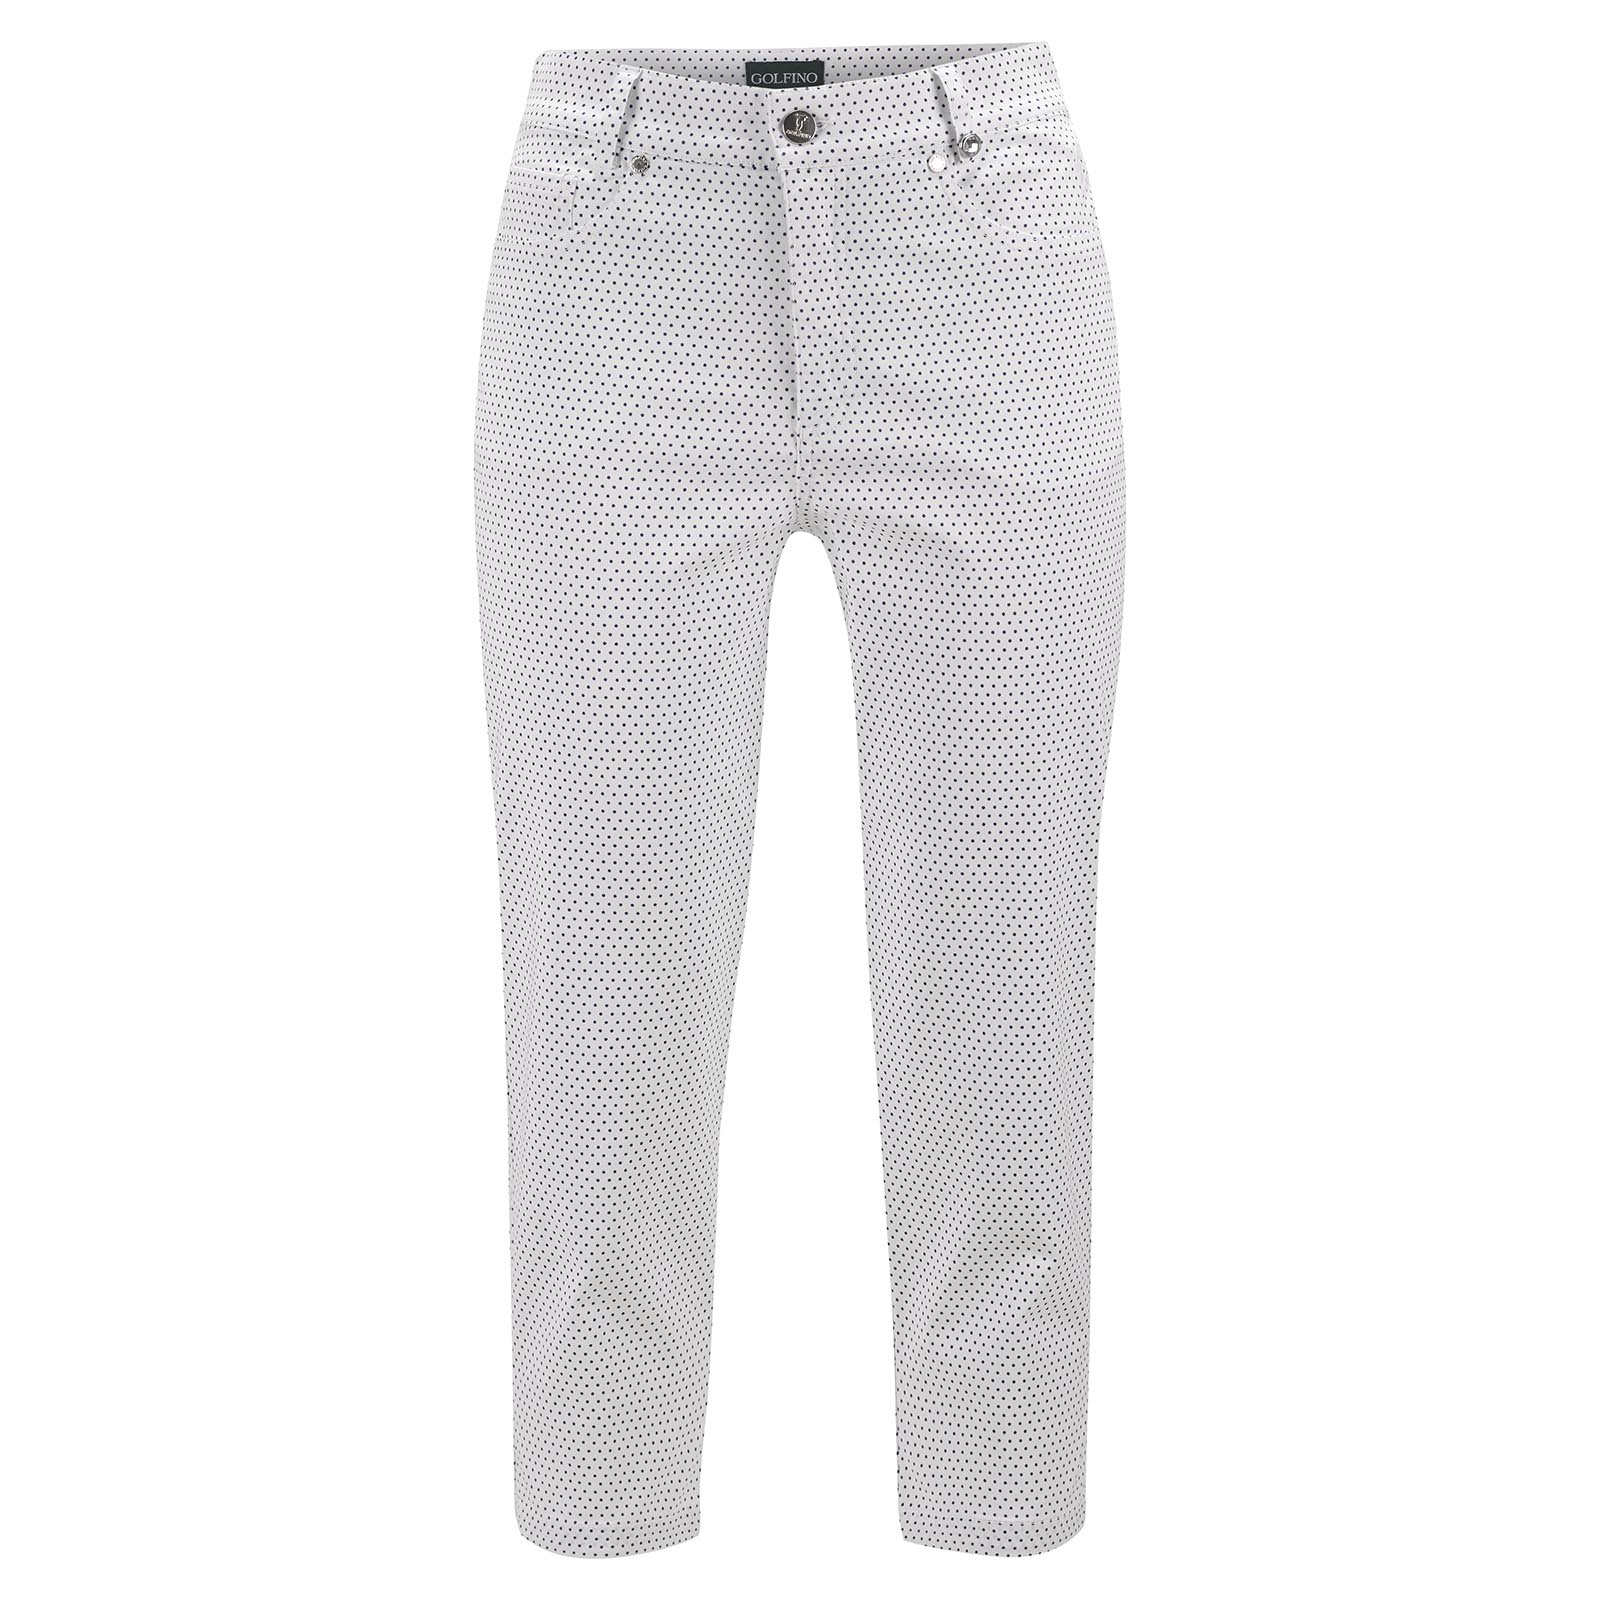 Cotton Blend Ladies' Golf Capri trousers with stylish dot pattern